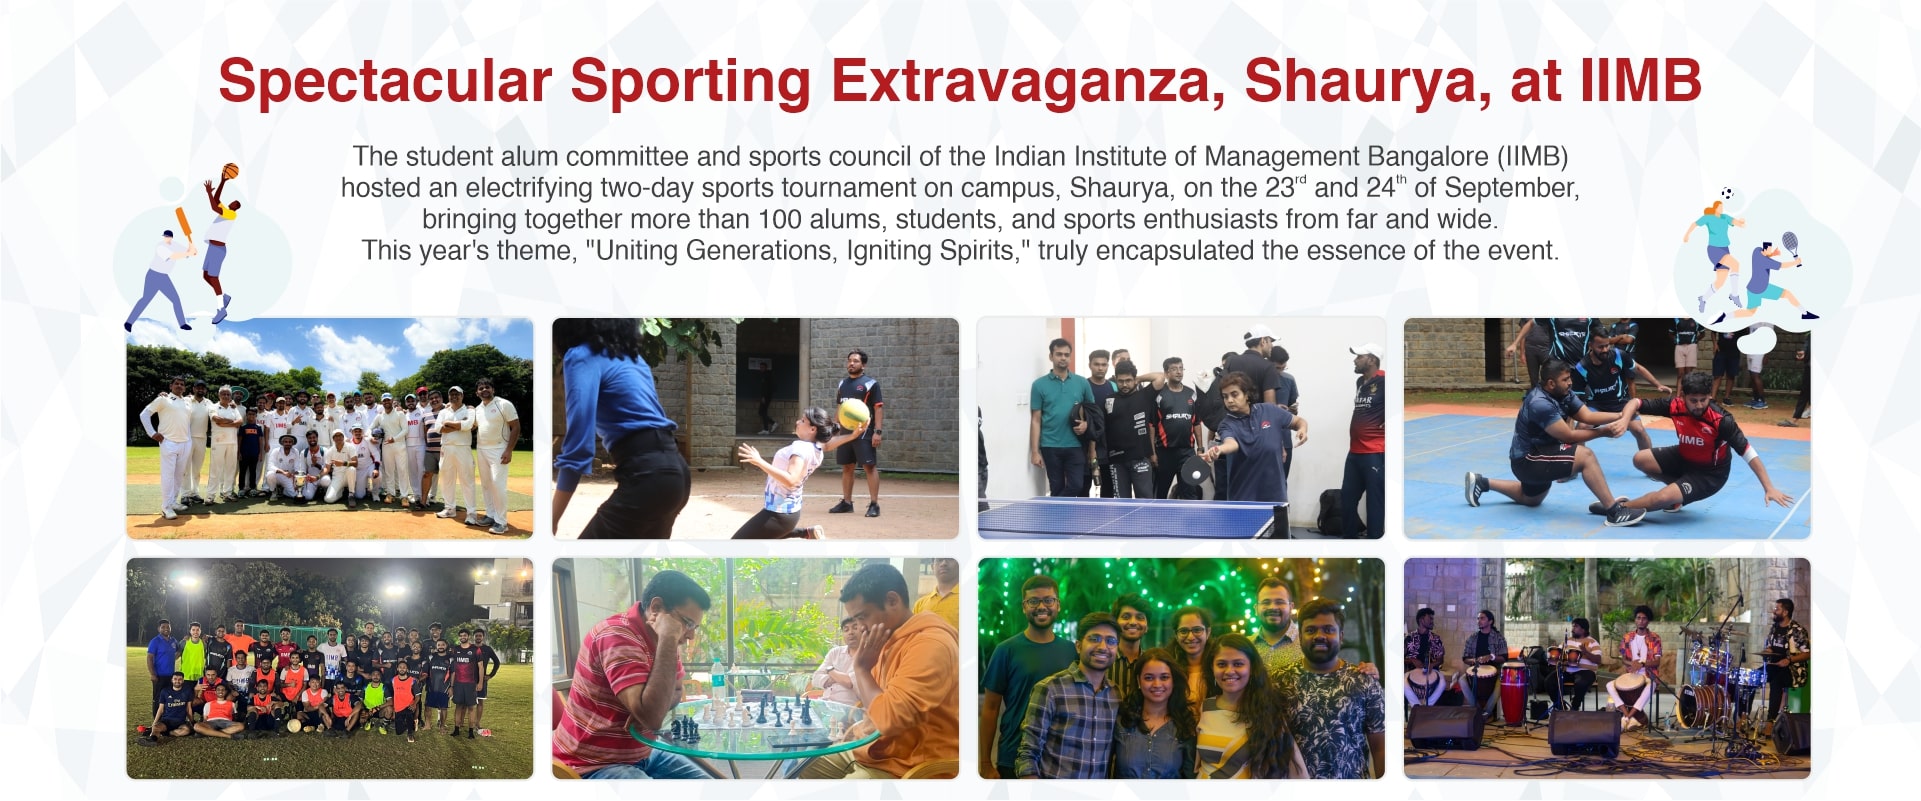 Spectacular Sporting Extravaganza, Shaurya, at IIMB